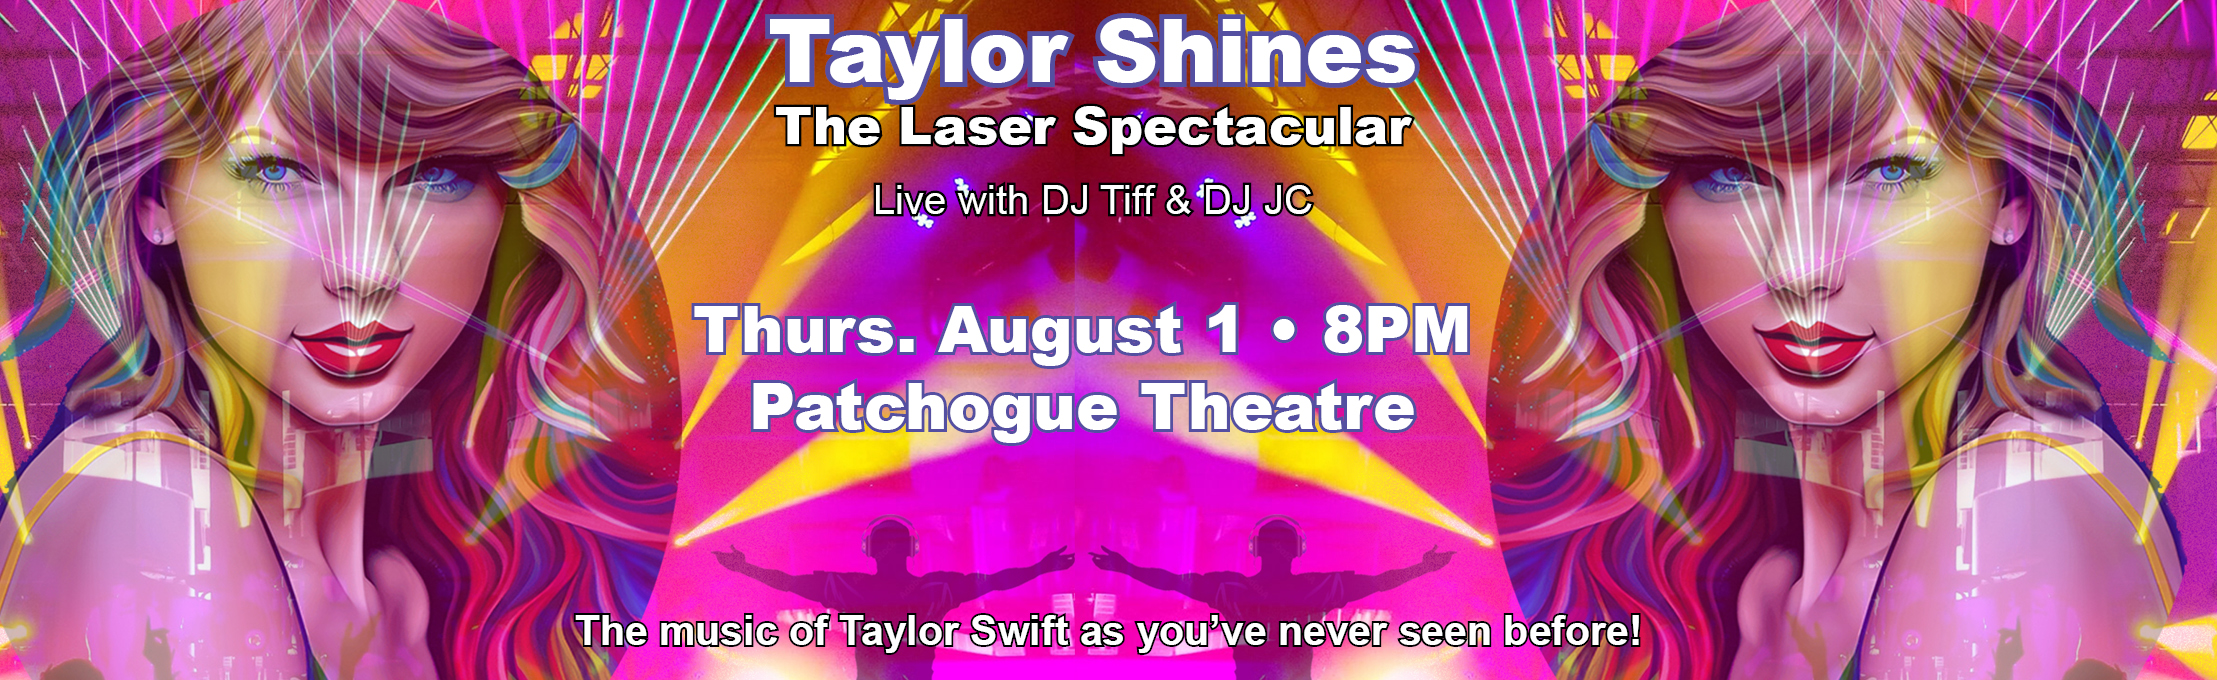 Taylor Swift Laser Spectacular